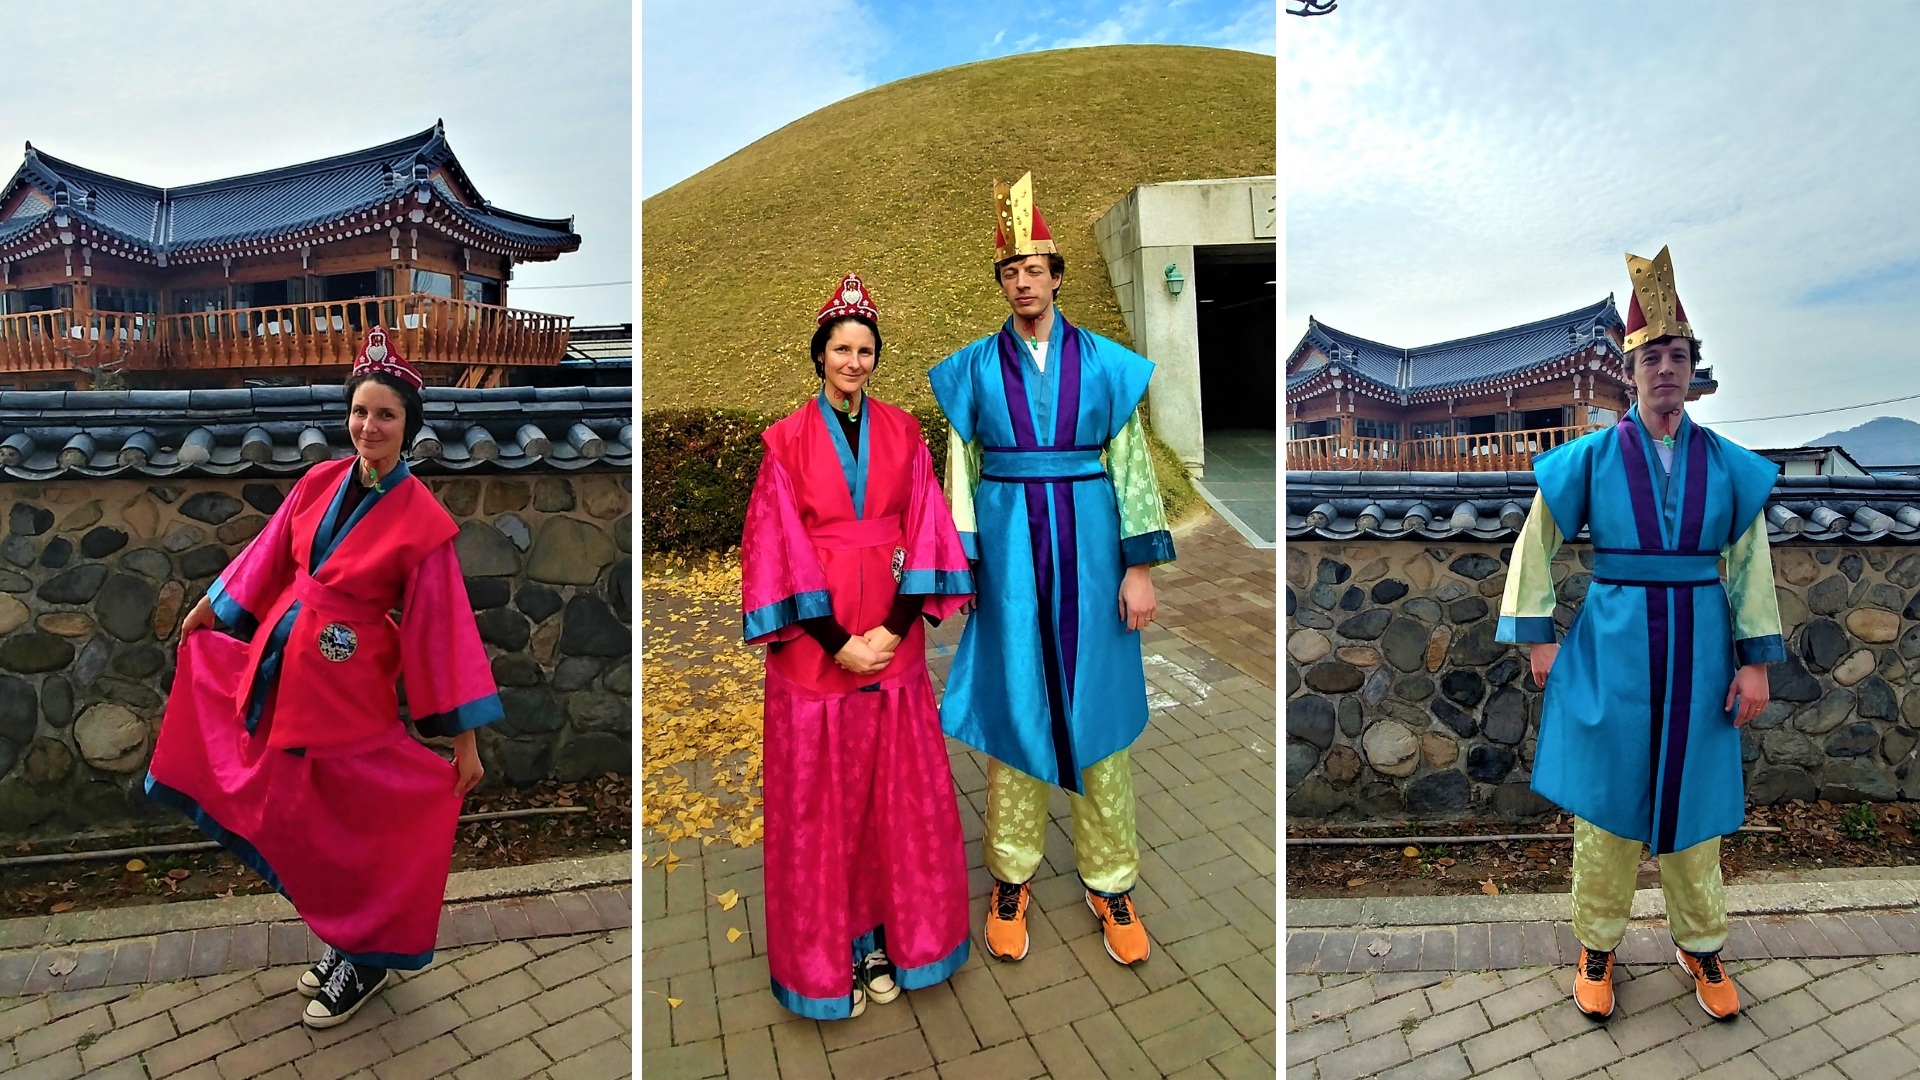 gyeongju tombes royales Cheonmachong coree voyage blog arpenter le chemin